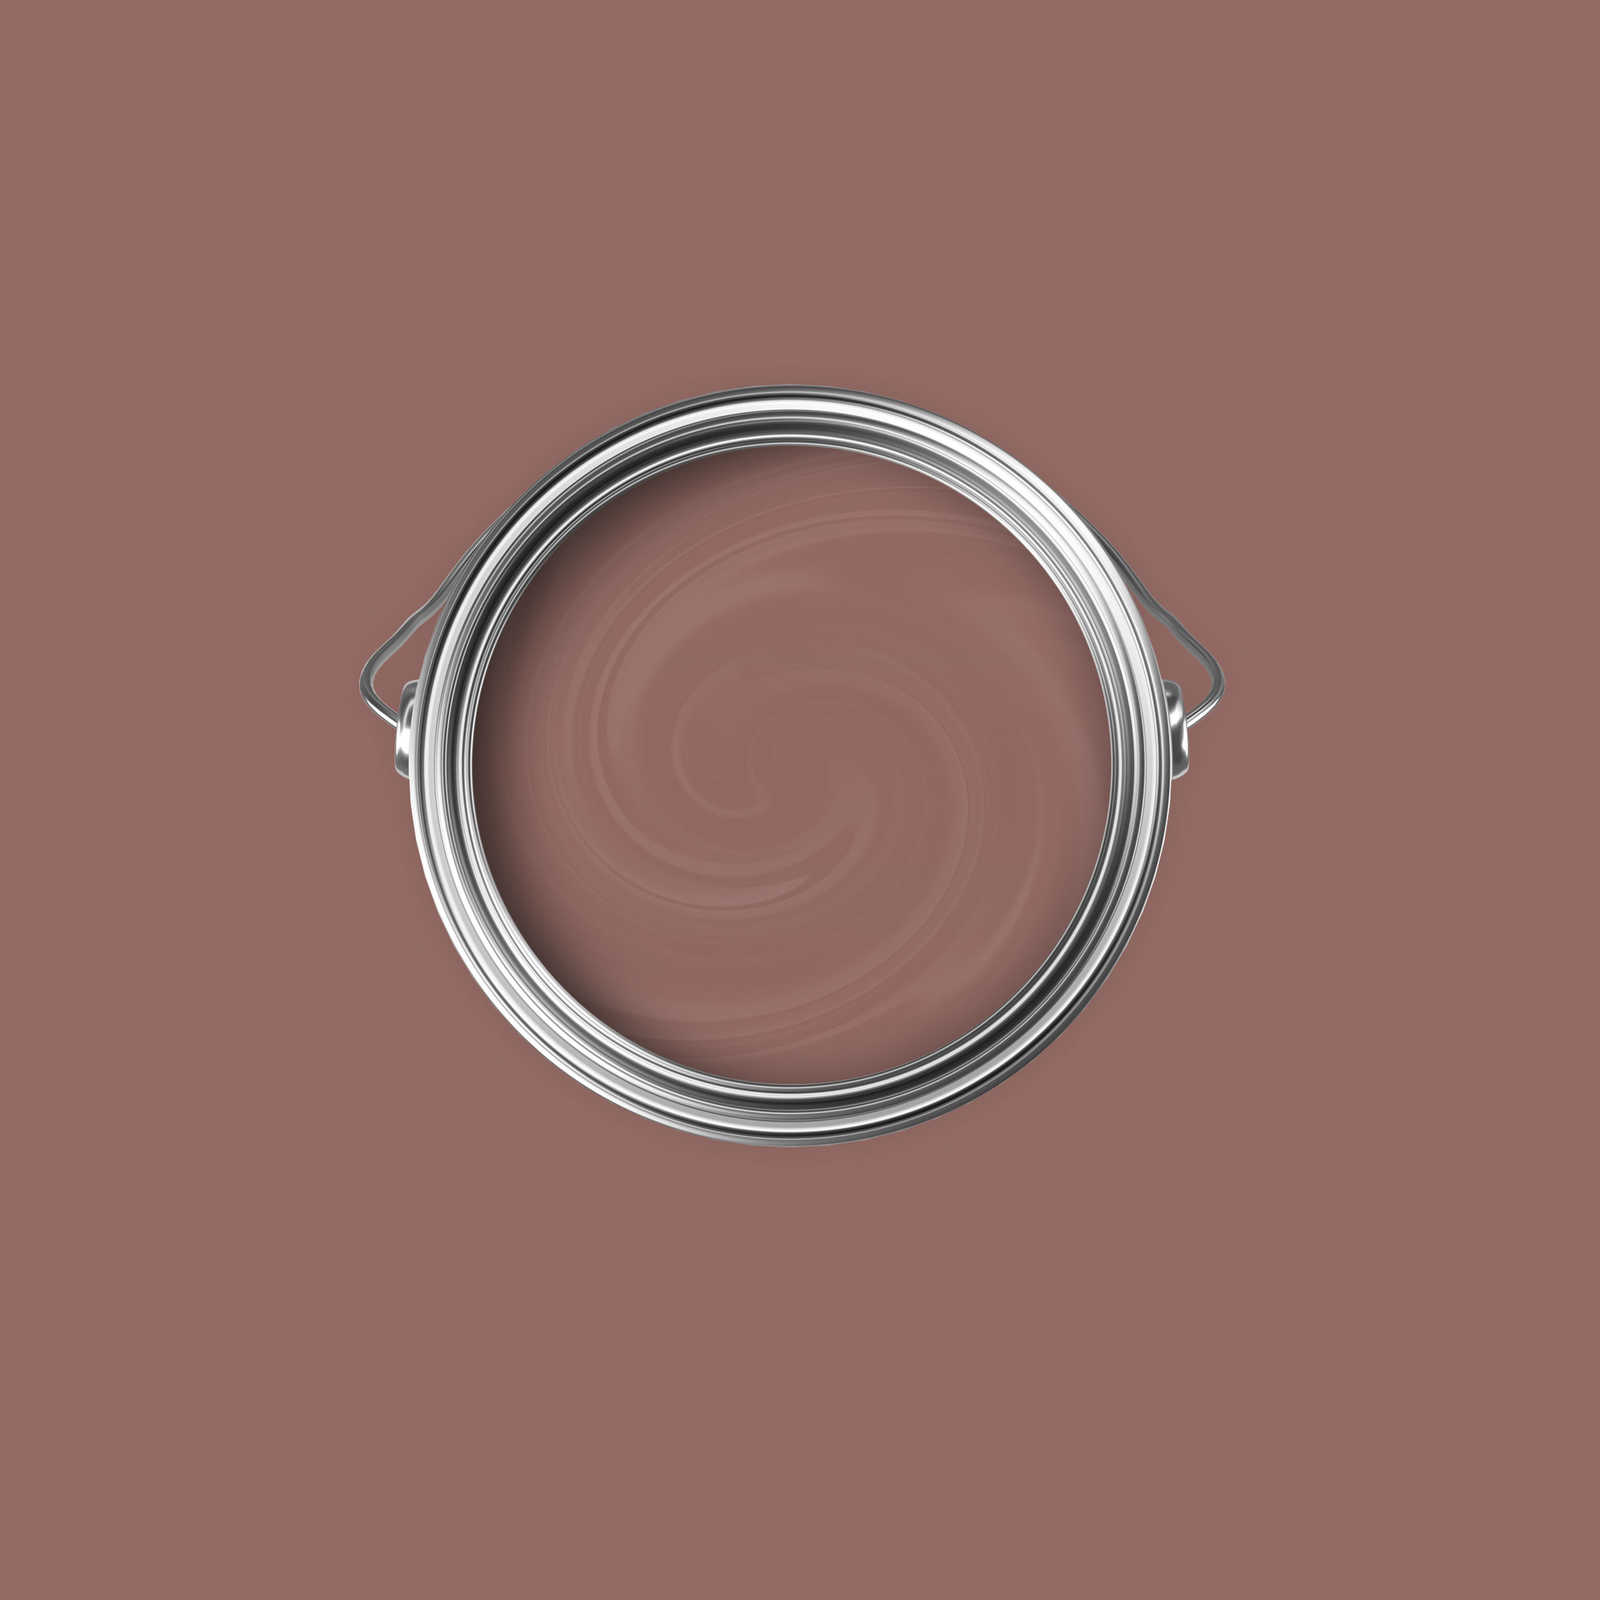             Premium Wandfarbe natürliches Dunkelrosa »Natural Nude« NW1012 – 2,5 Liter
        